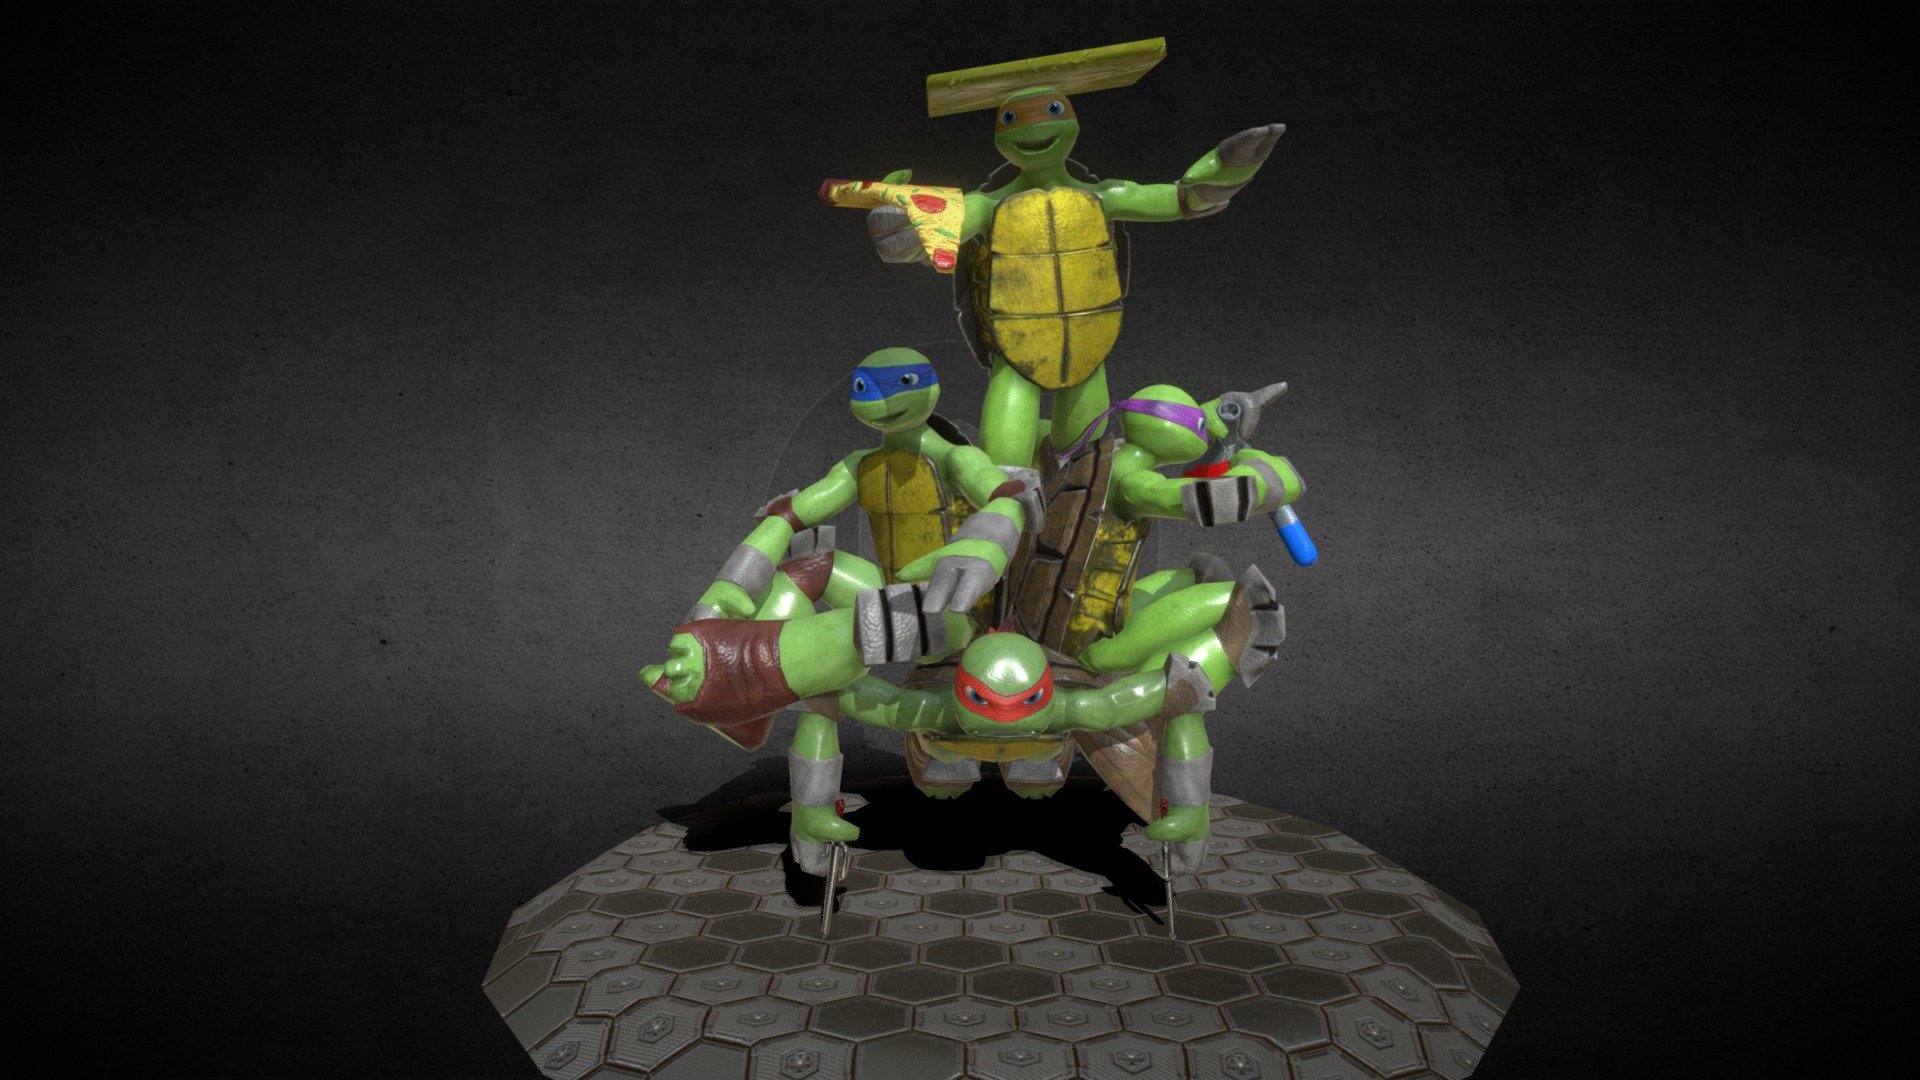 Practica de pose Tortugas ninja - TMNT Tortugas Ninja - 3D model by Krlts 3d model